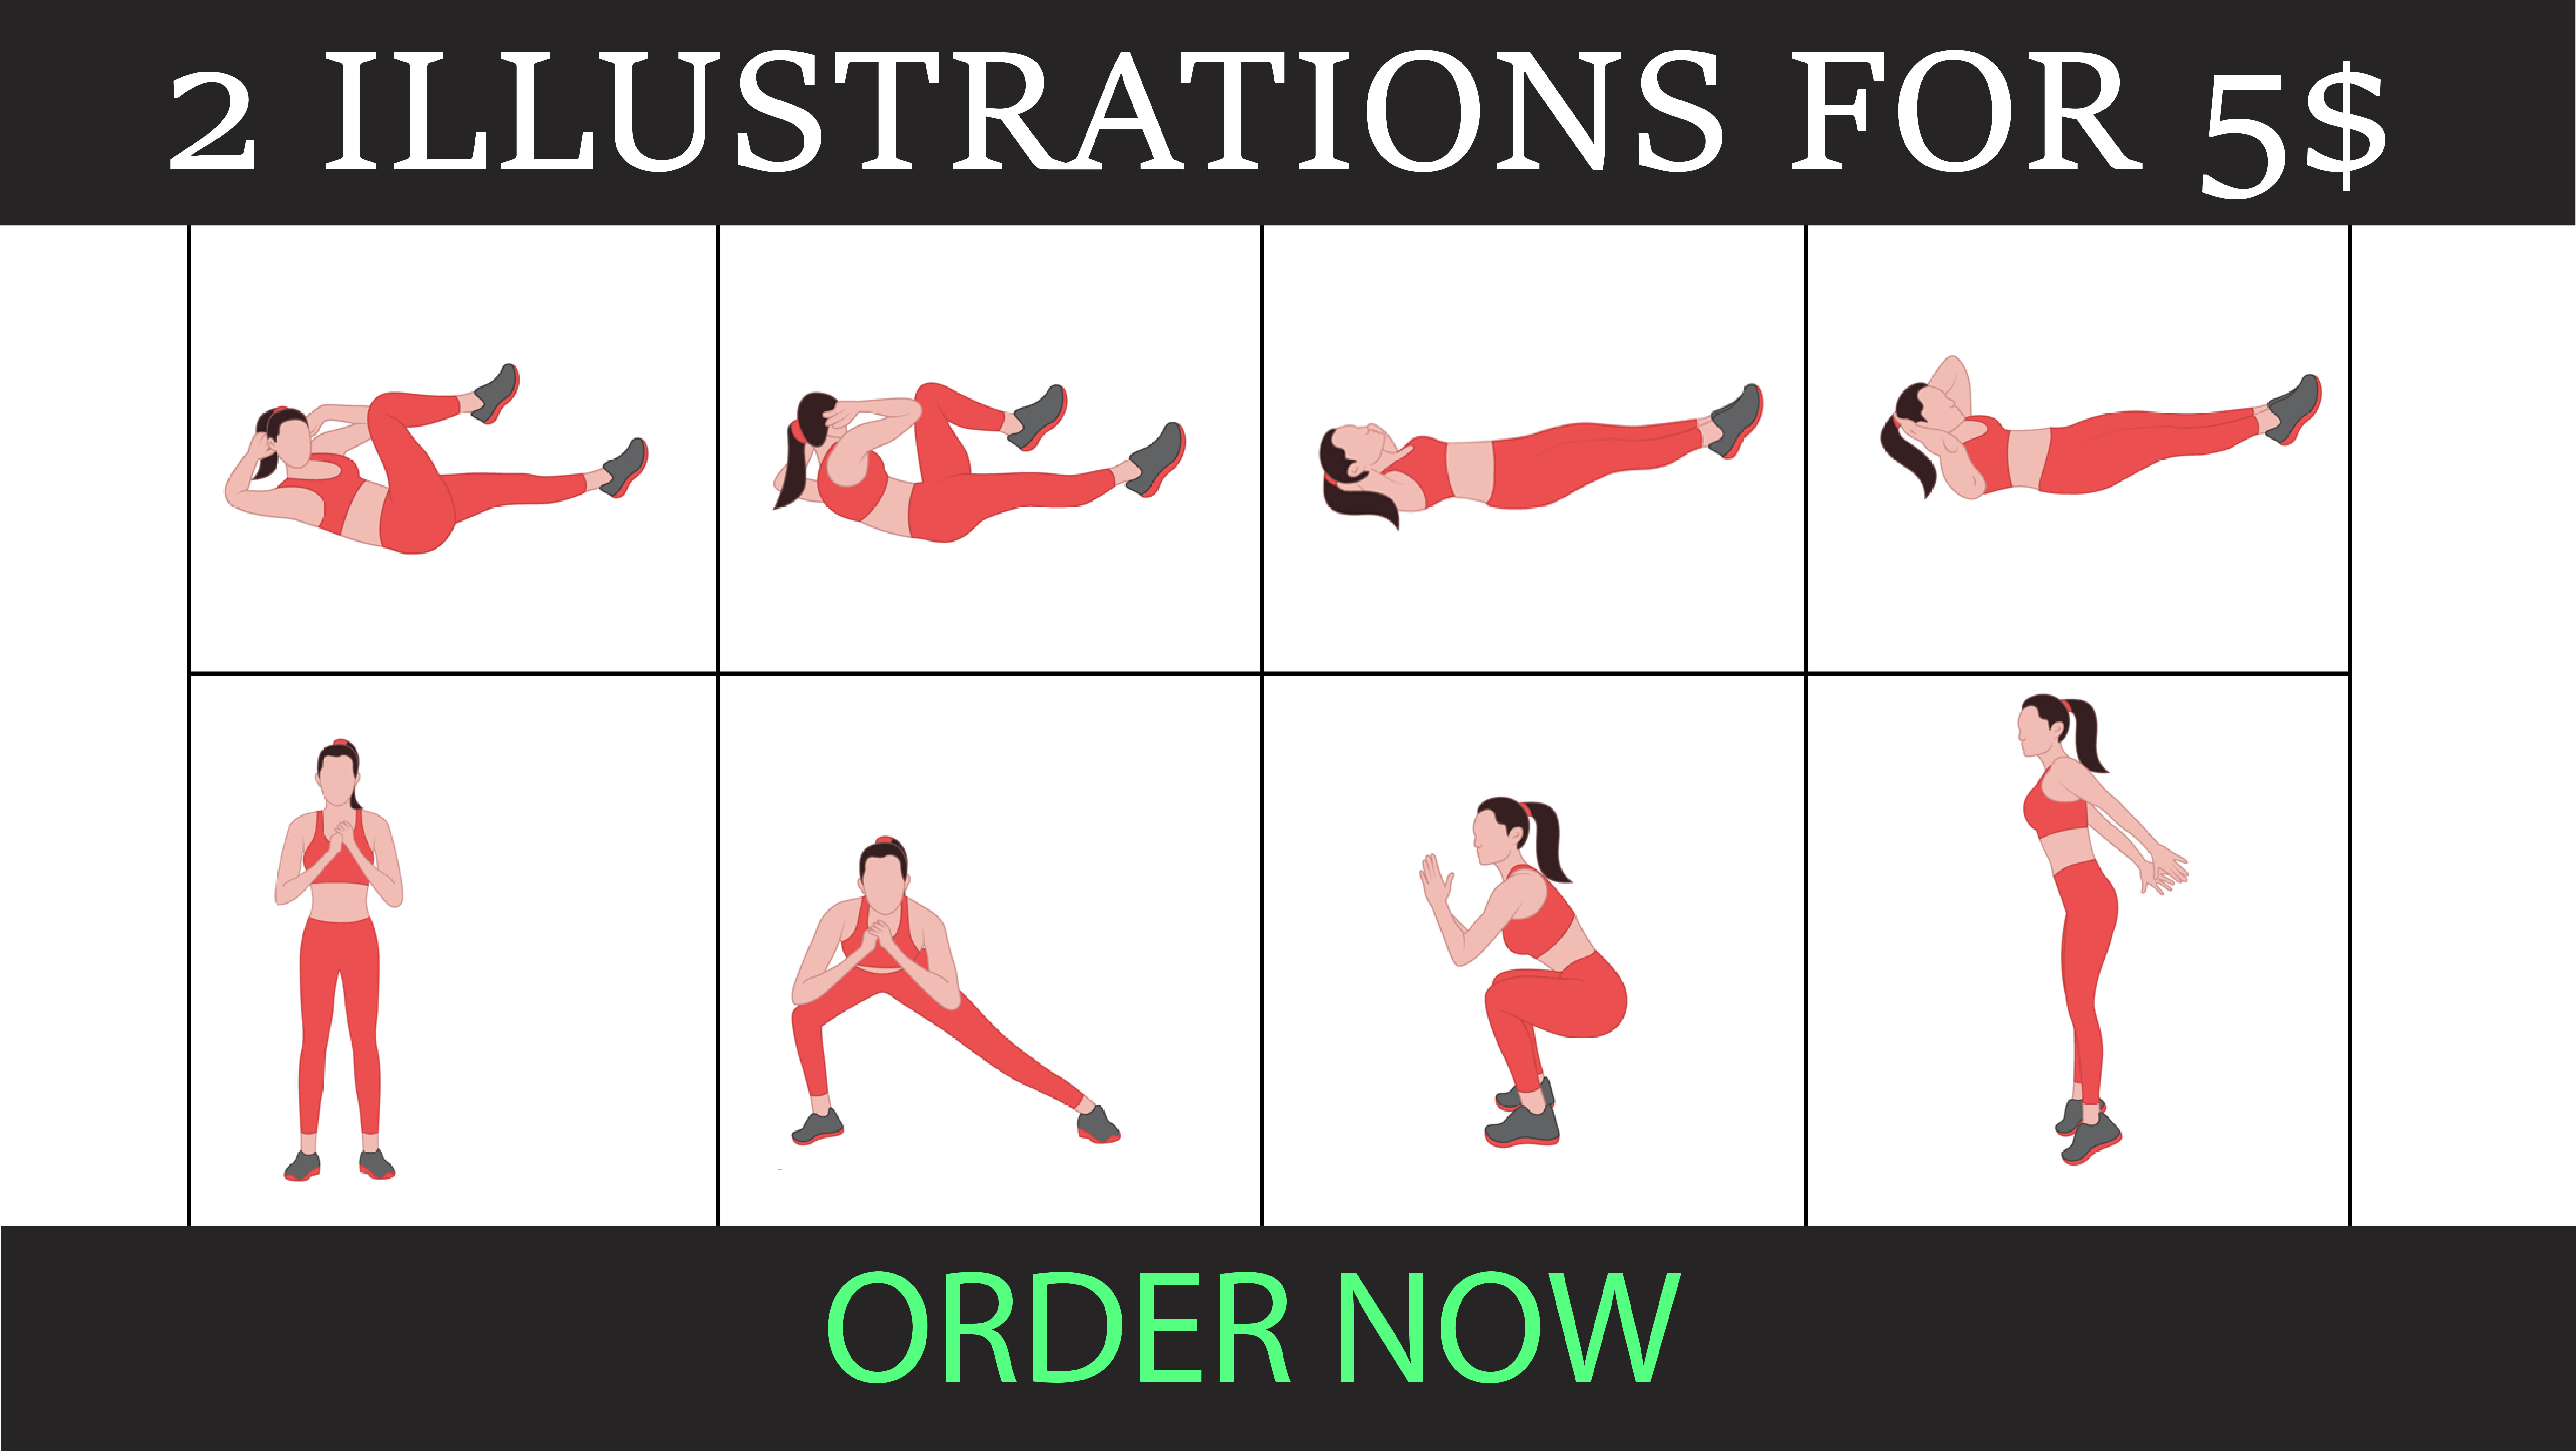 Exercise, workout, yoga, medical, etc manual illustration and gif